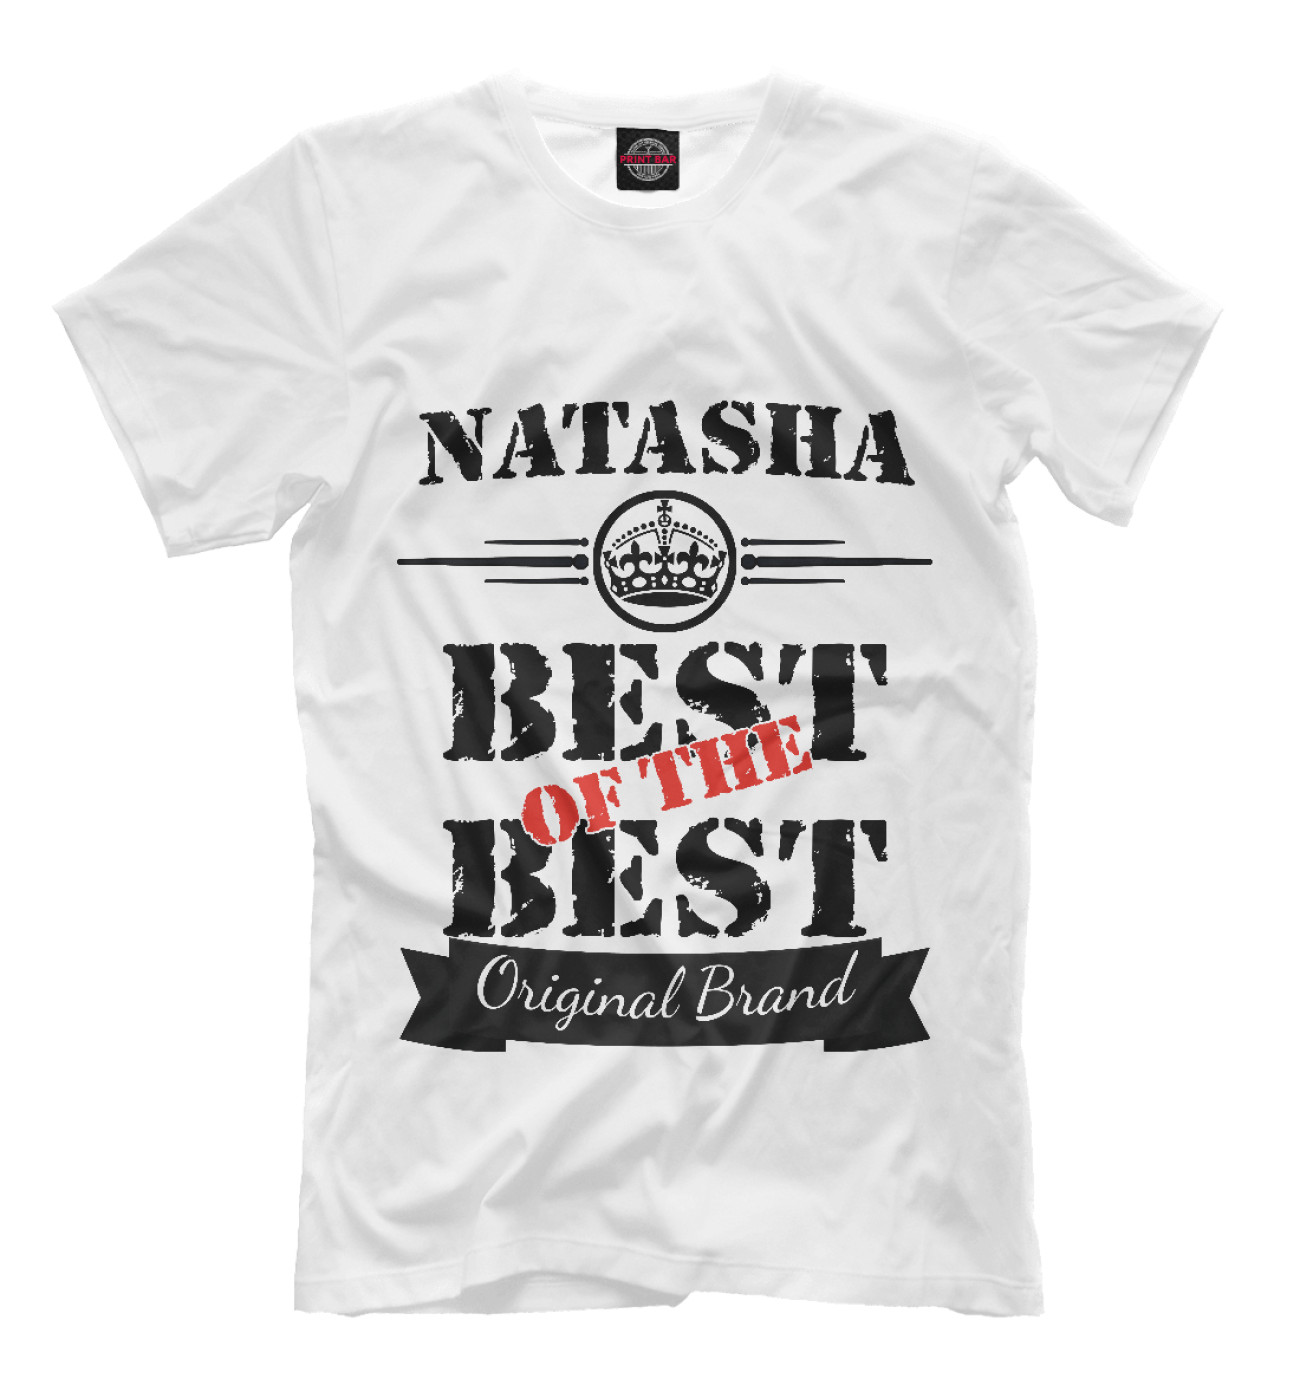 Мужская Футболка Наташа Best of the best (og brand), артикул: NTL-132662-fut-2